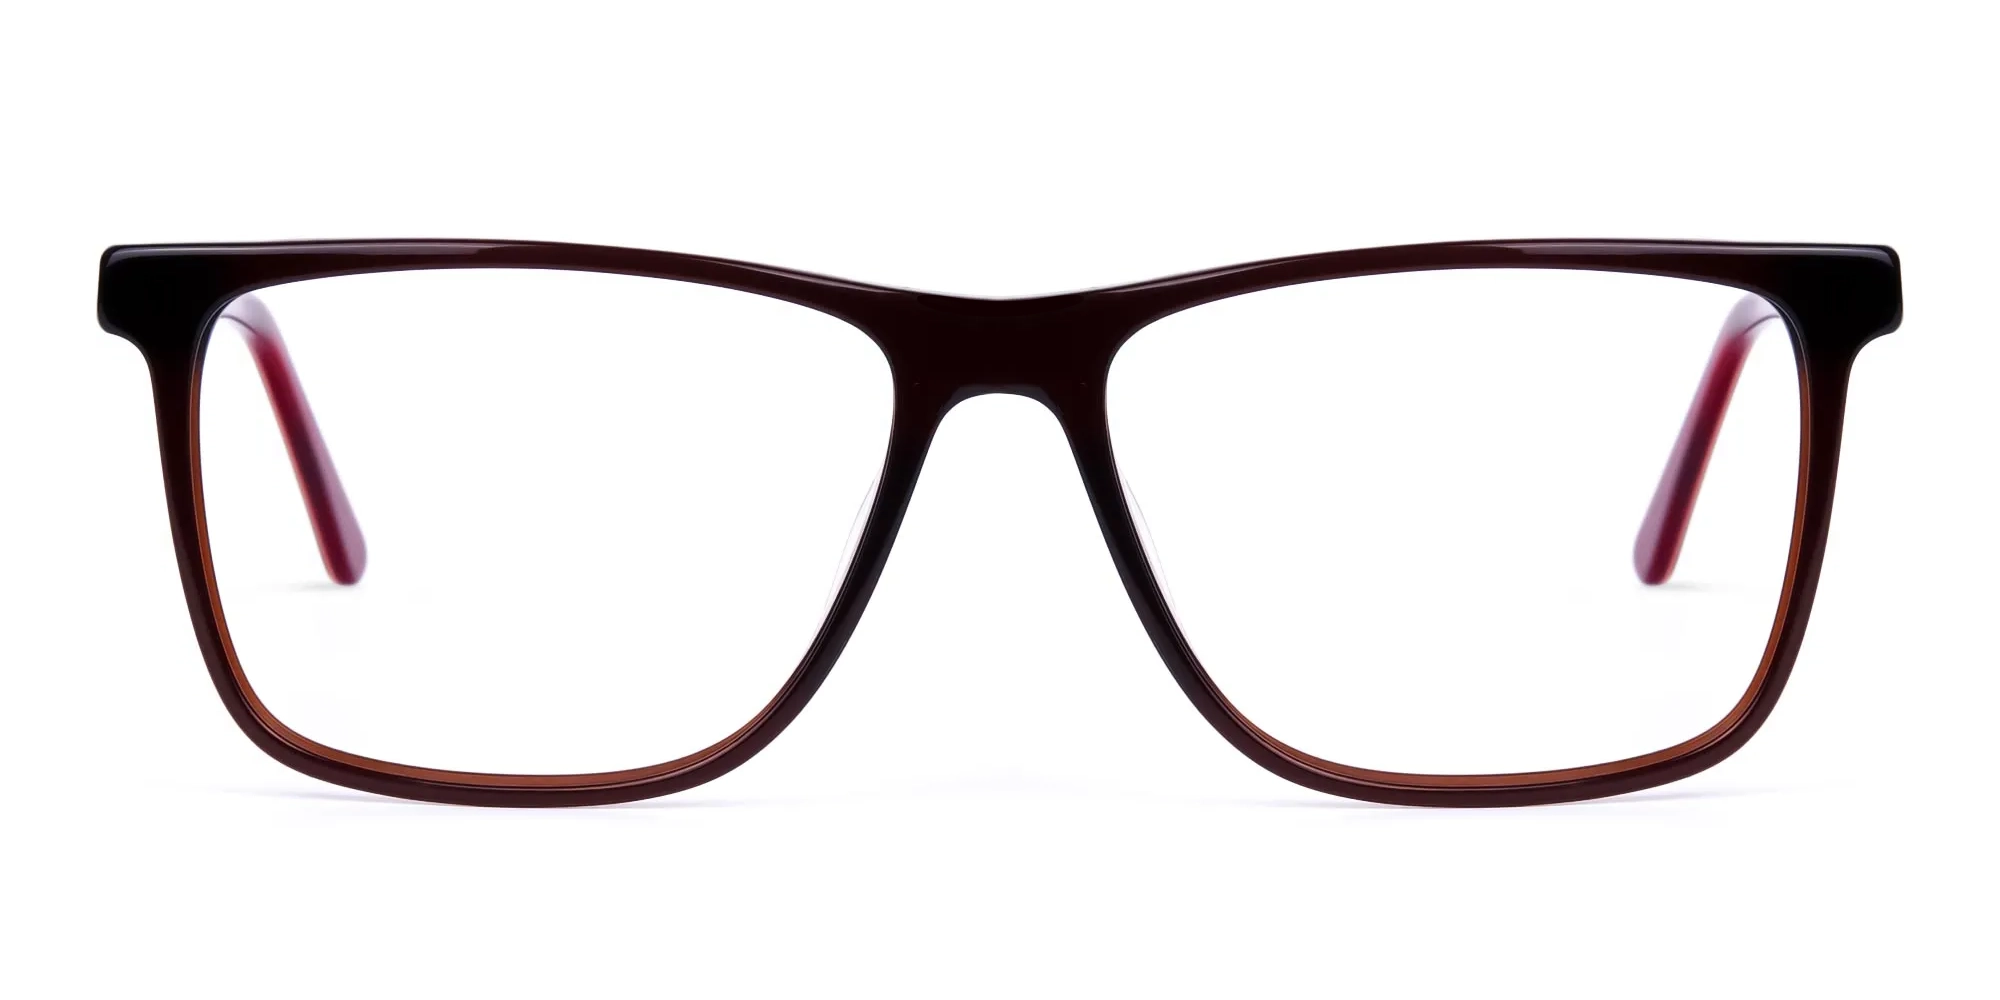 Stylish-Brown-Rectangular-Glasses-Frames-2